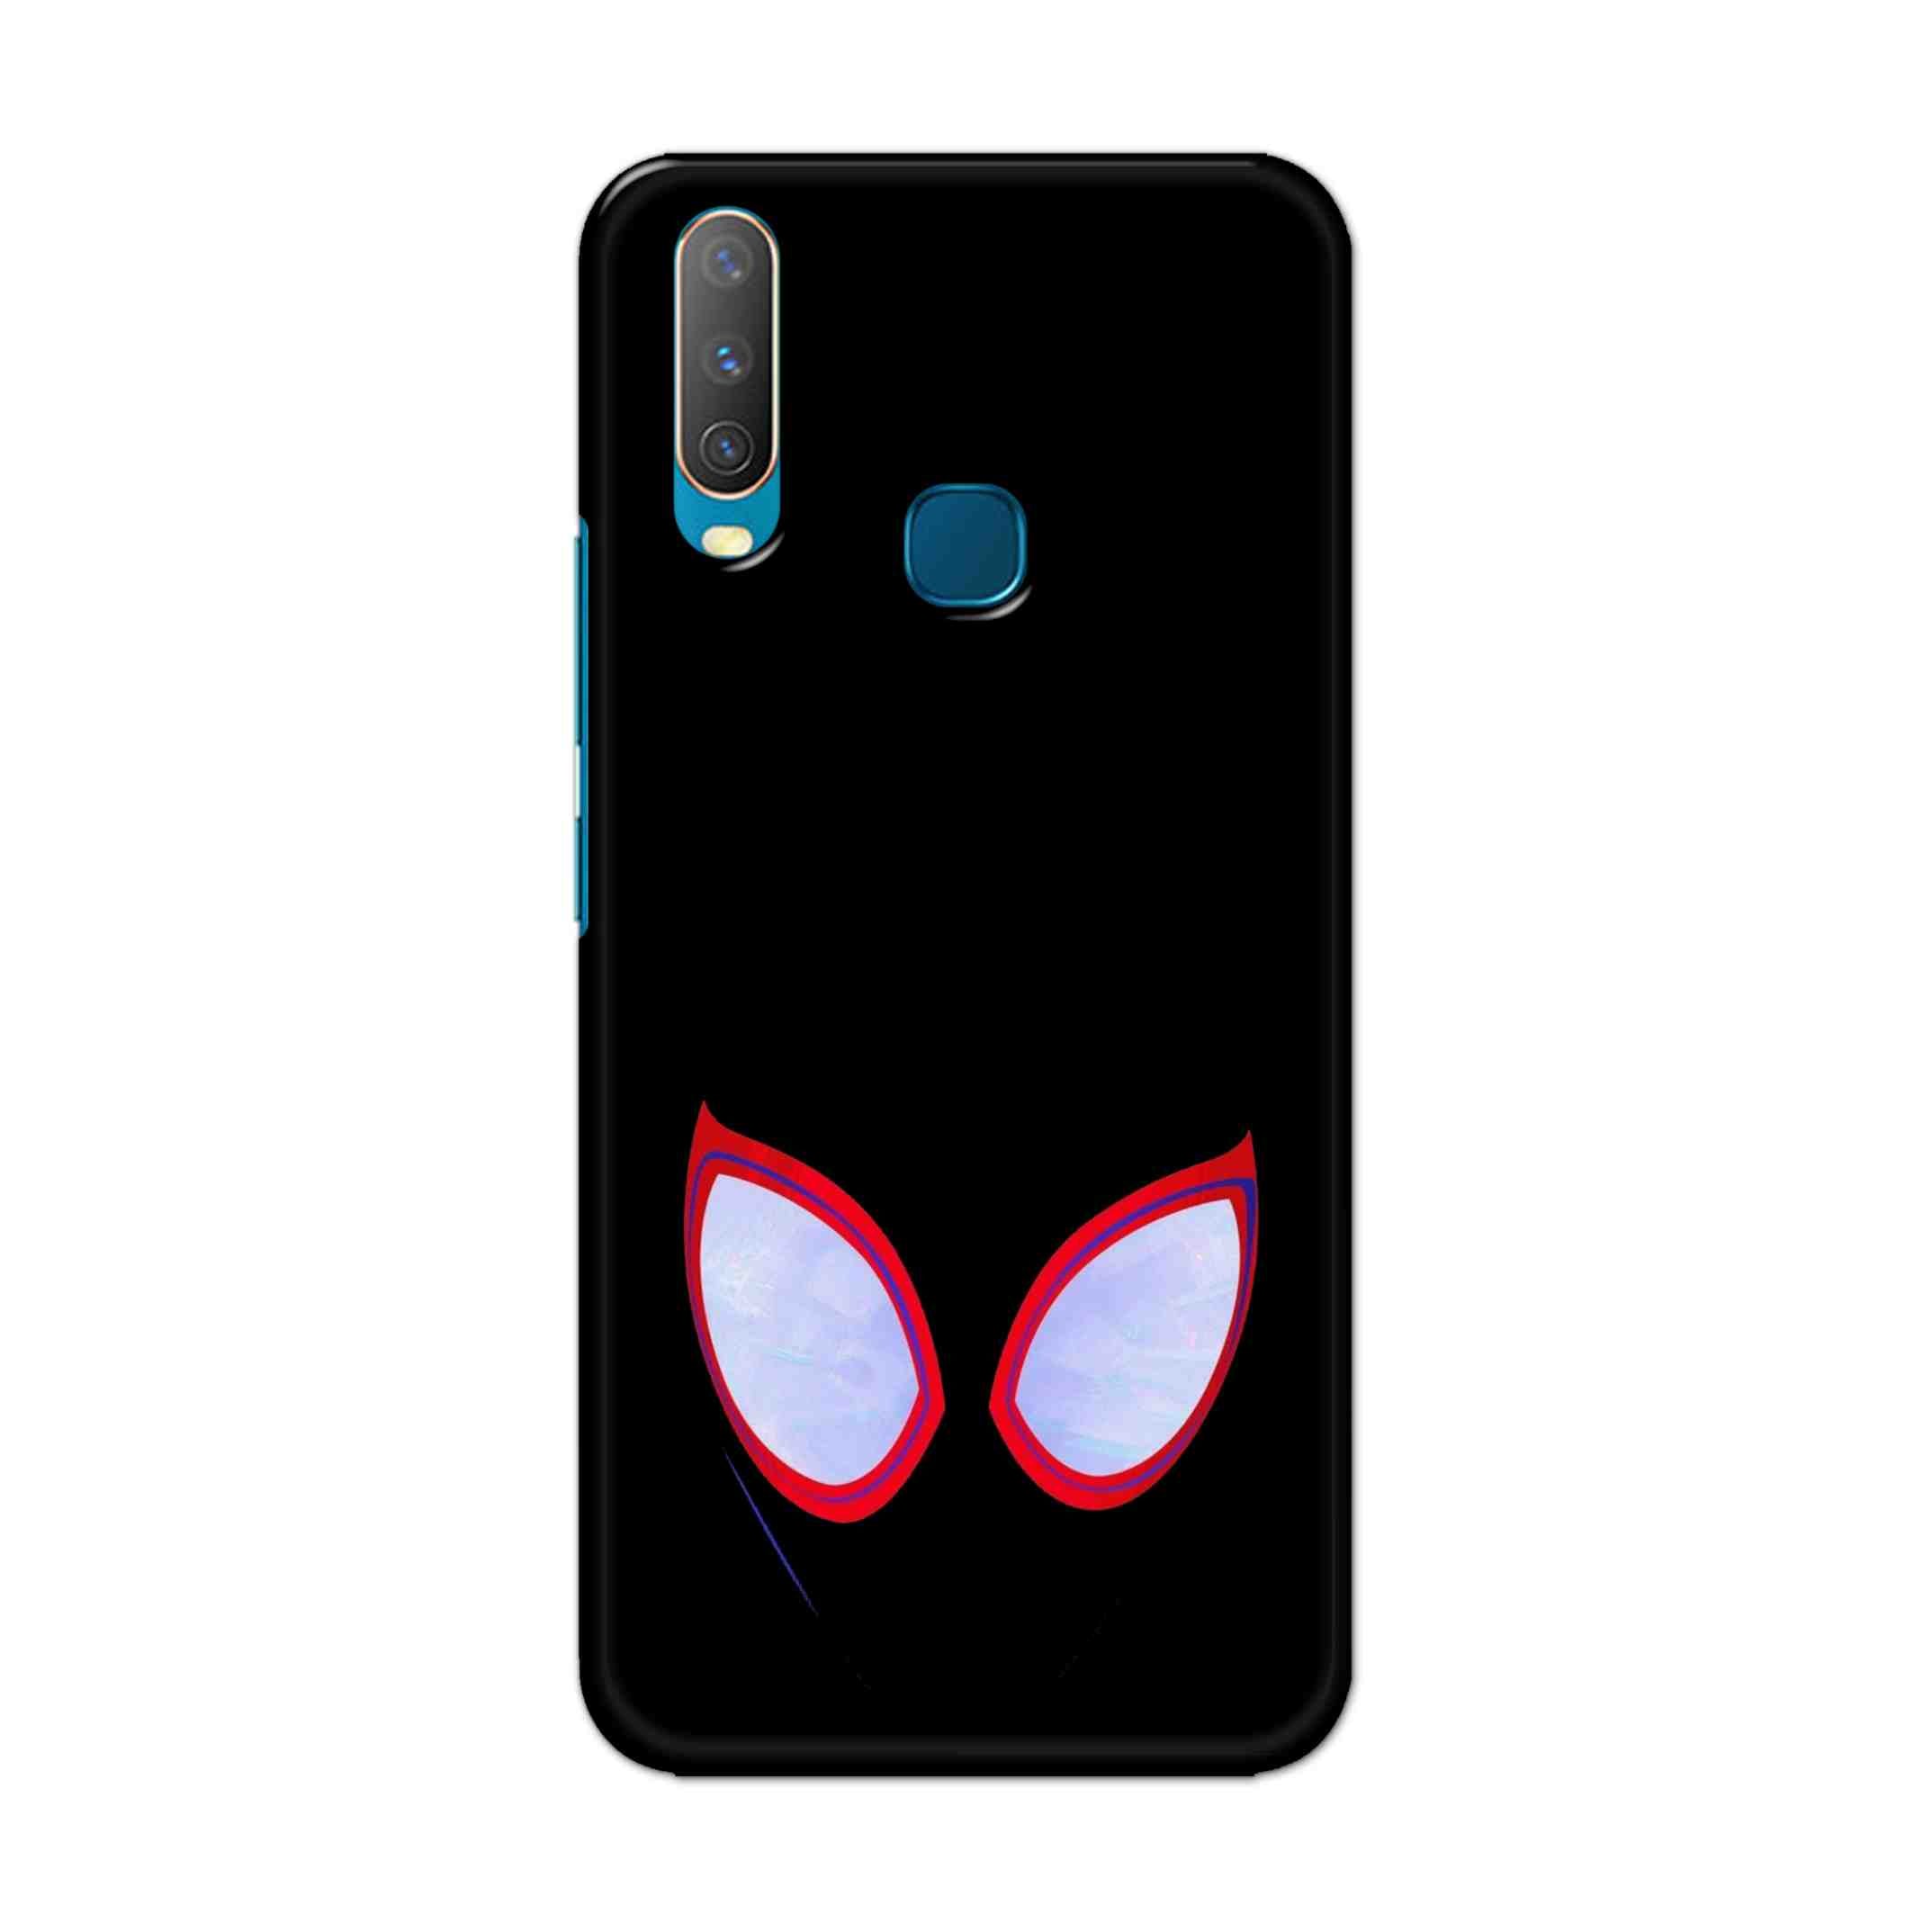 Buy Spiderman Eyes Hard Back Mobile Phone Case Cover For Vivo Y17 / U10 Online